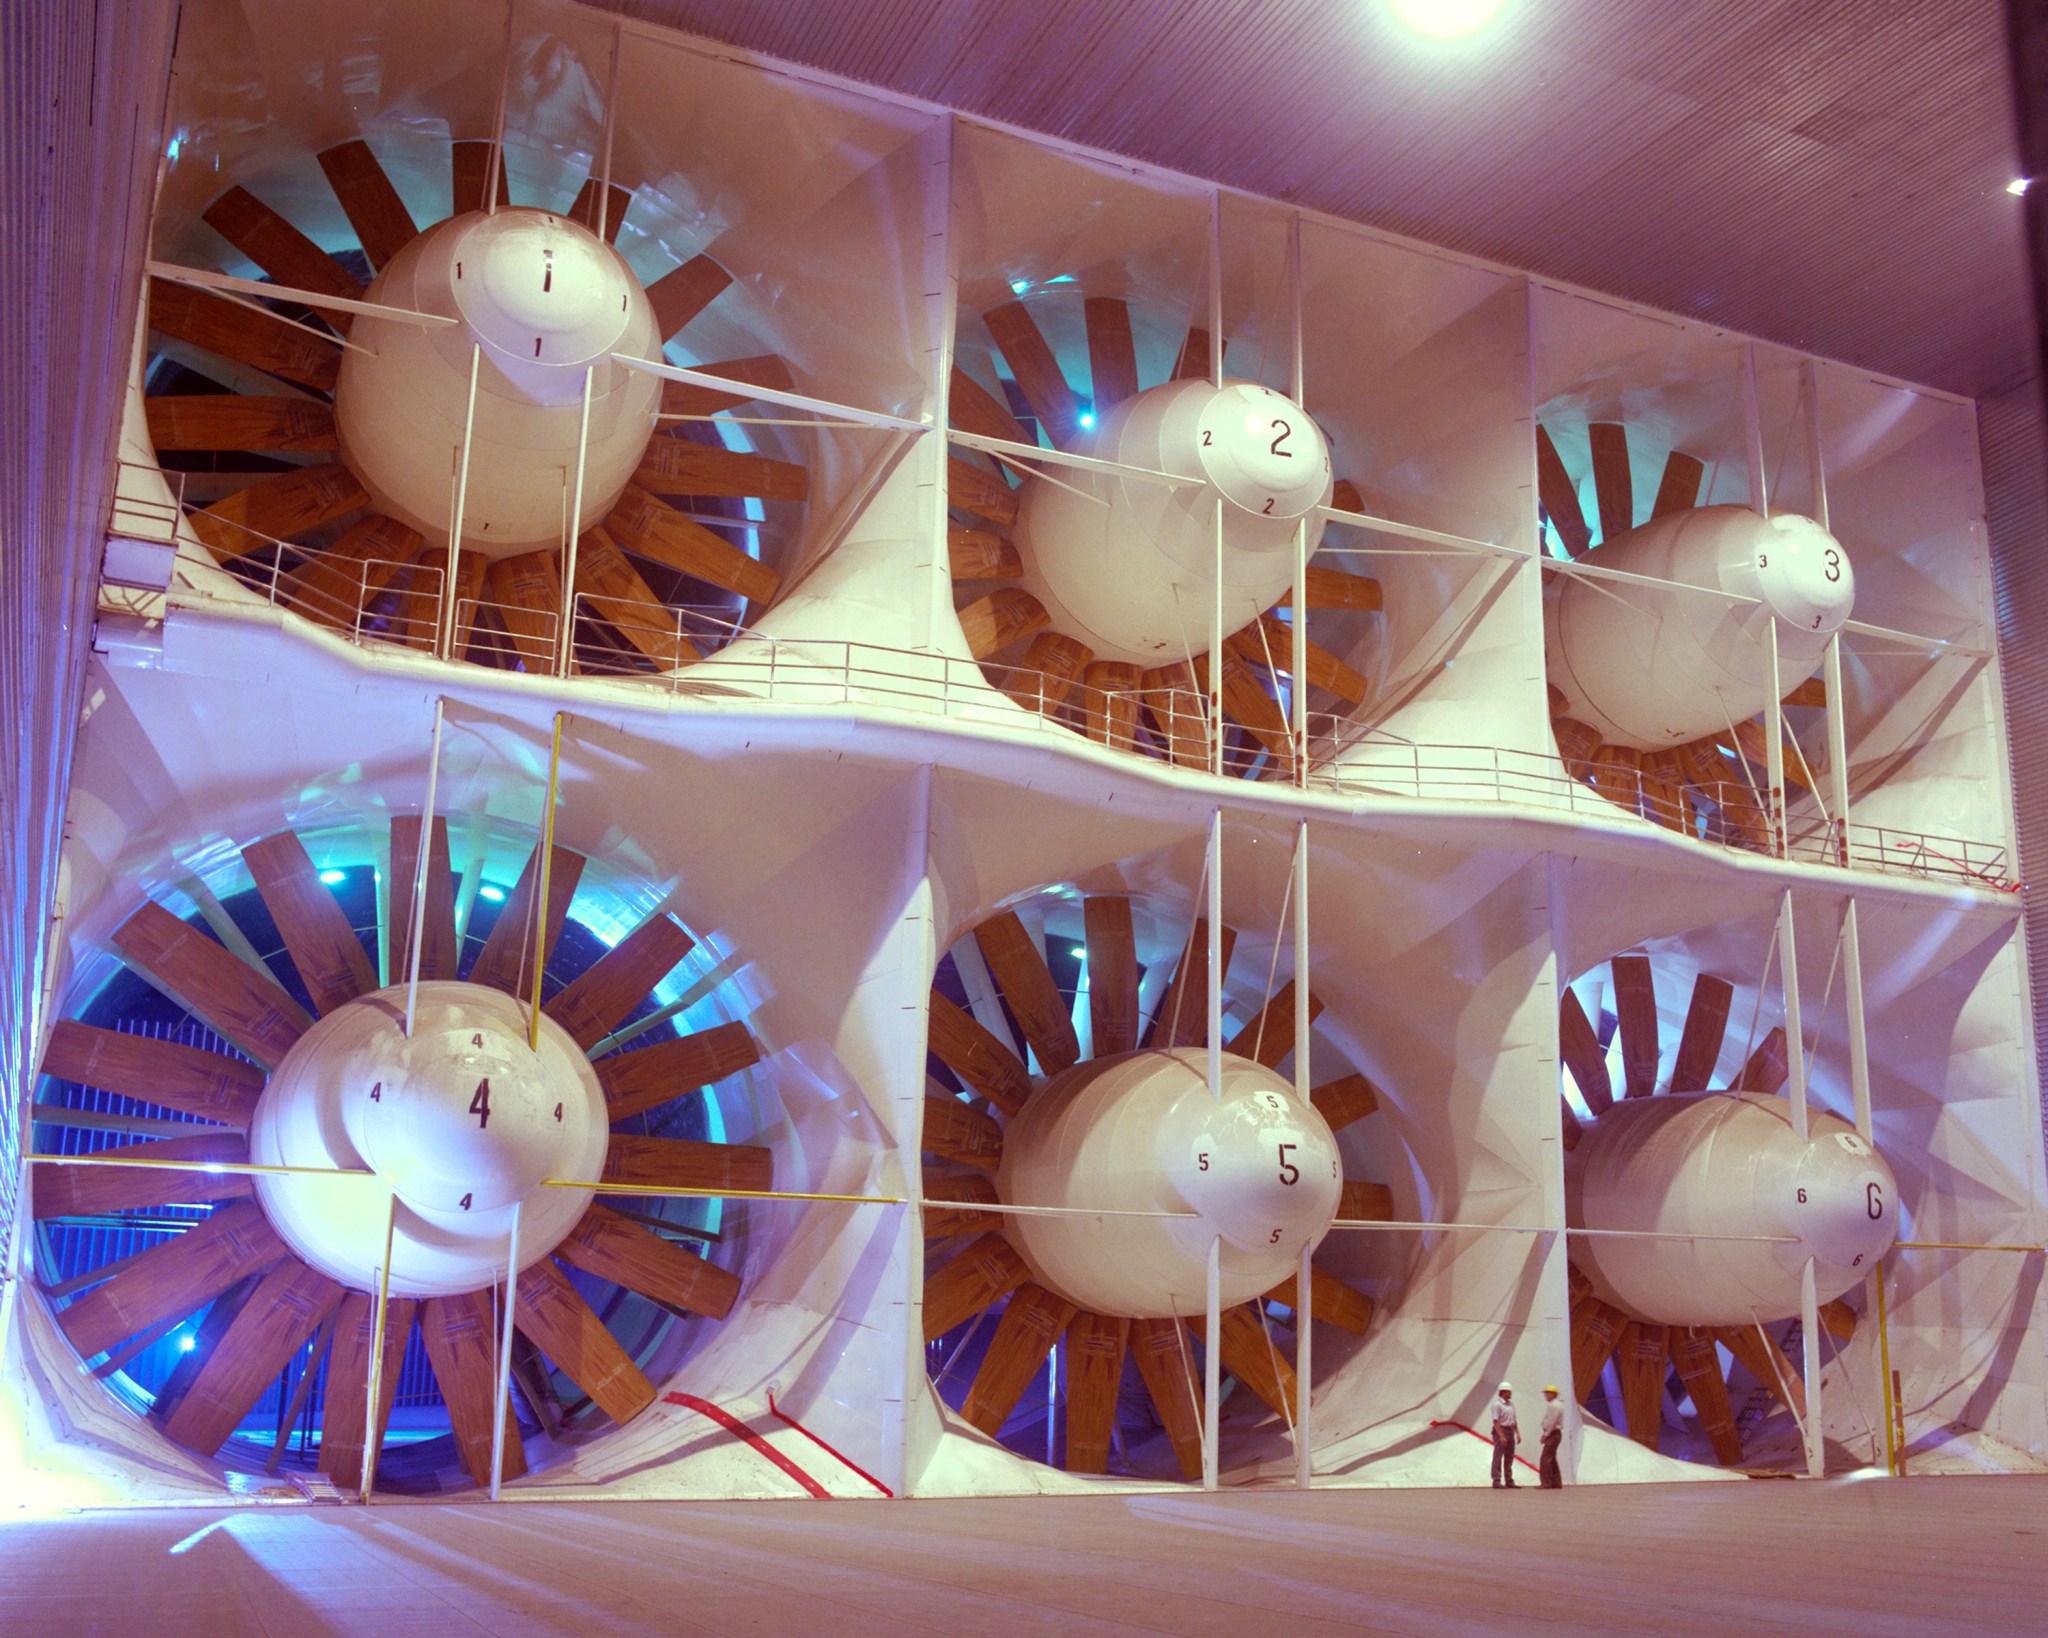 NFAC 80-foot-by-120-foot wind tunnel drive fans